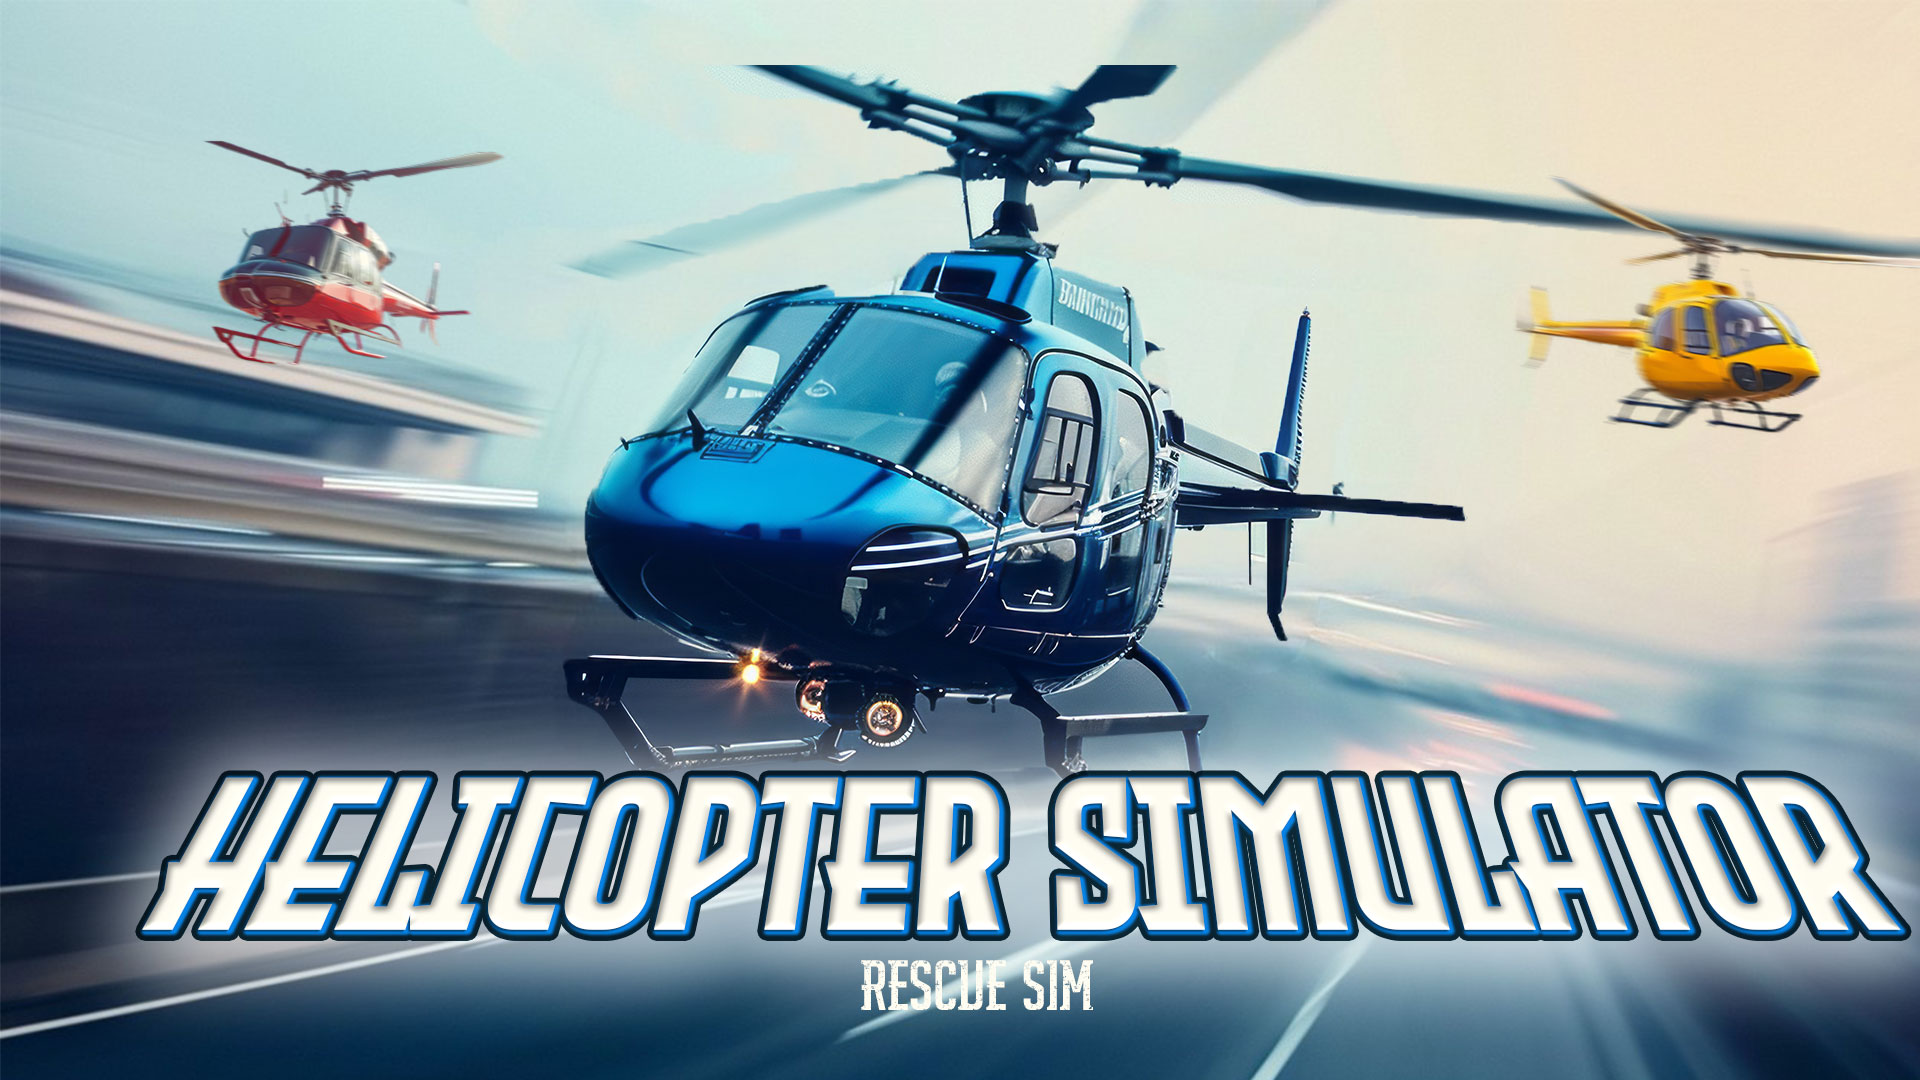 Helicopter Simulator : RESCUE SIM